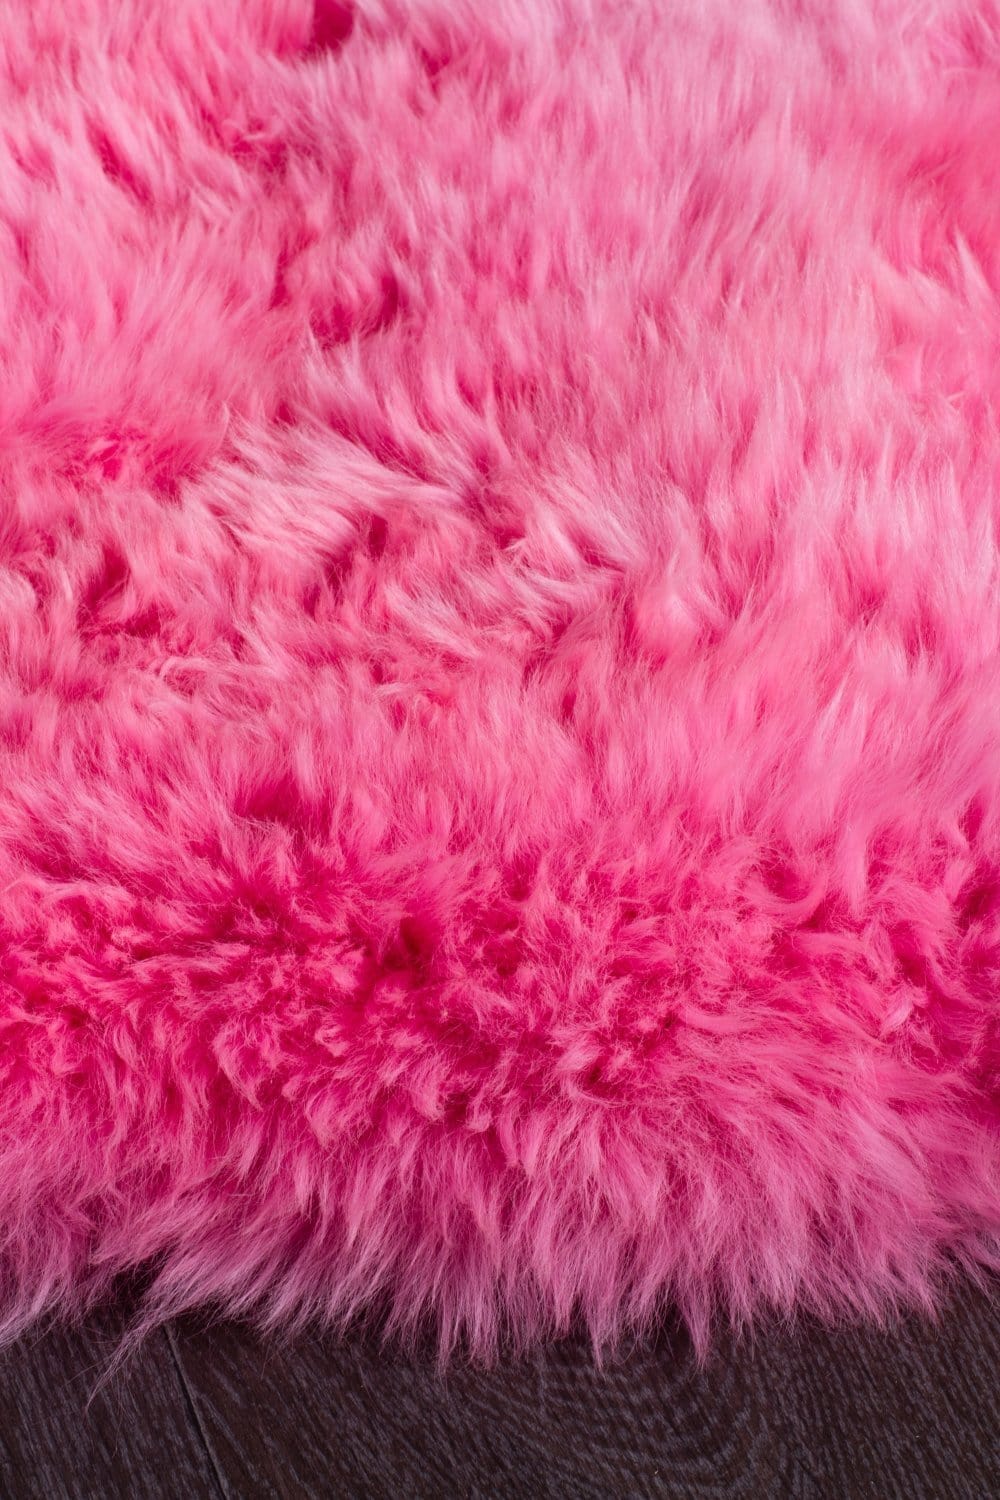 Sheepskin in Hot Pink